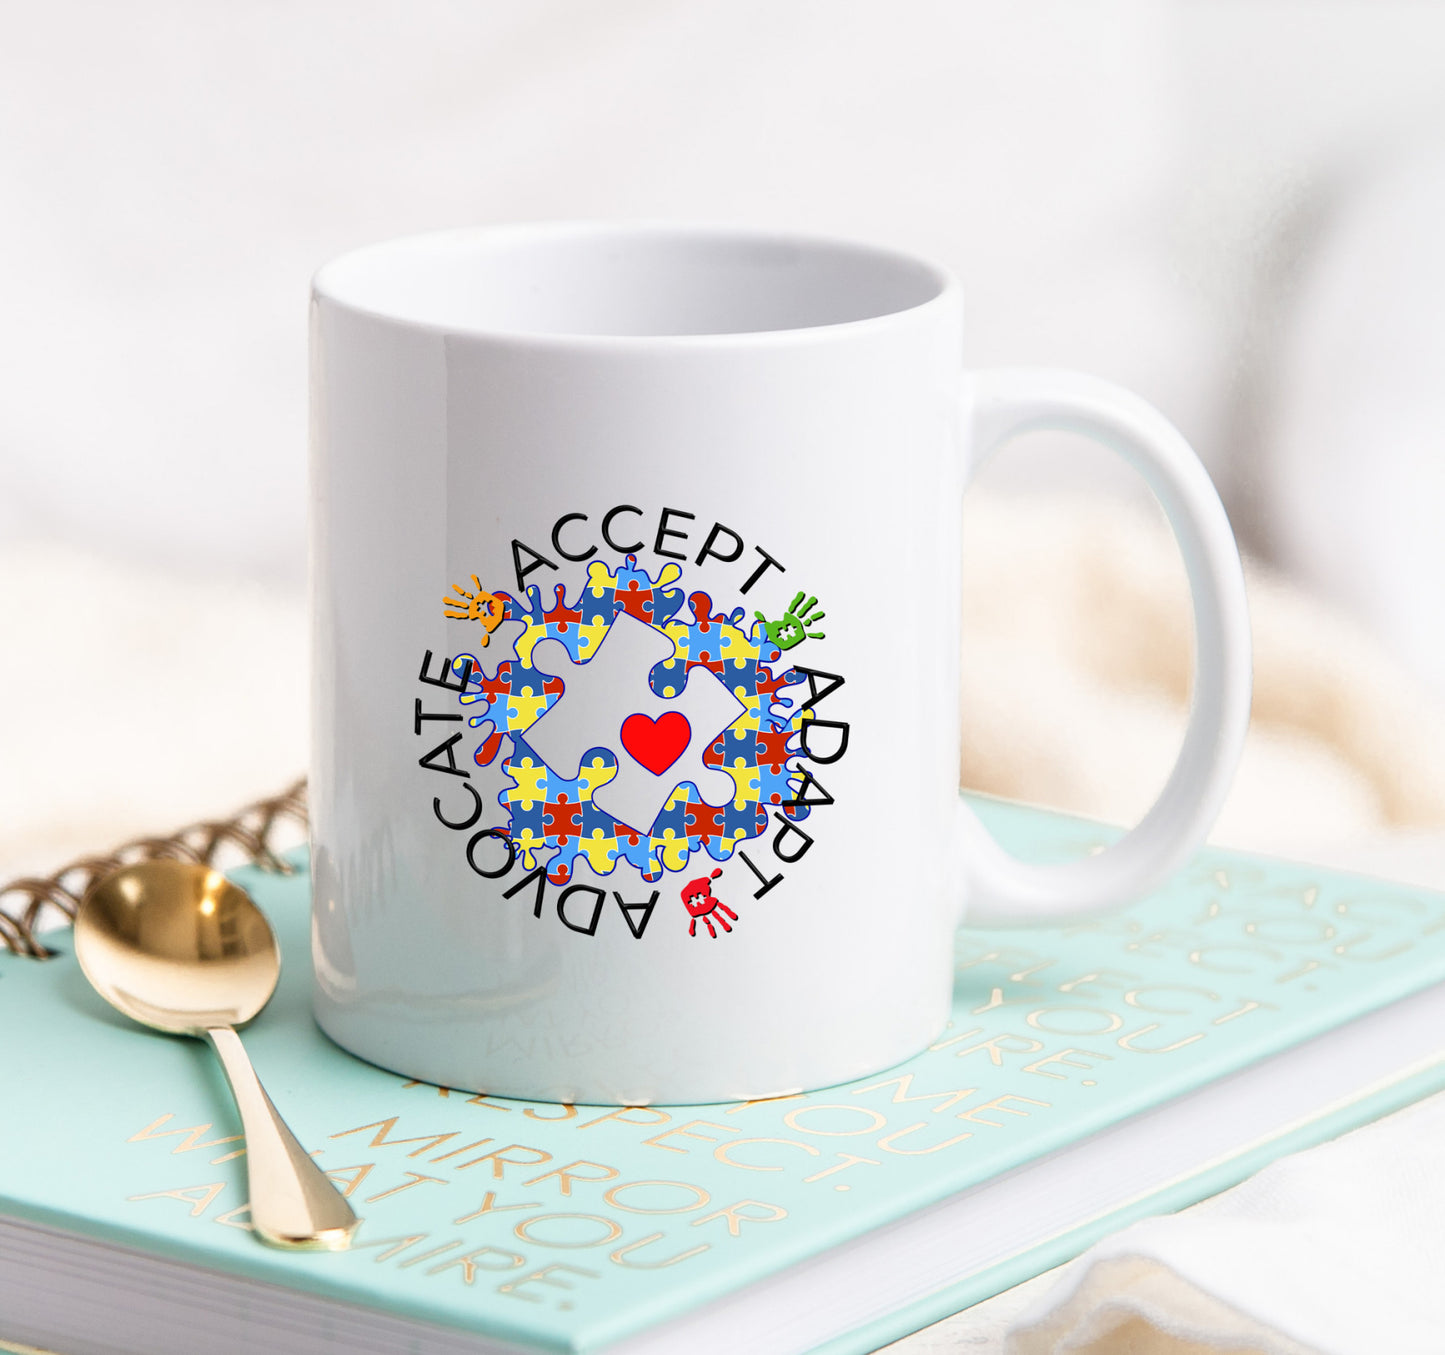 Accept, Adapt, Advocate Autism Awareness Coffee Mug